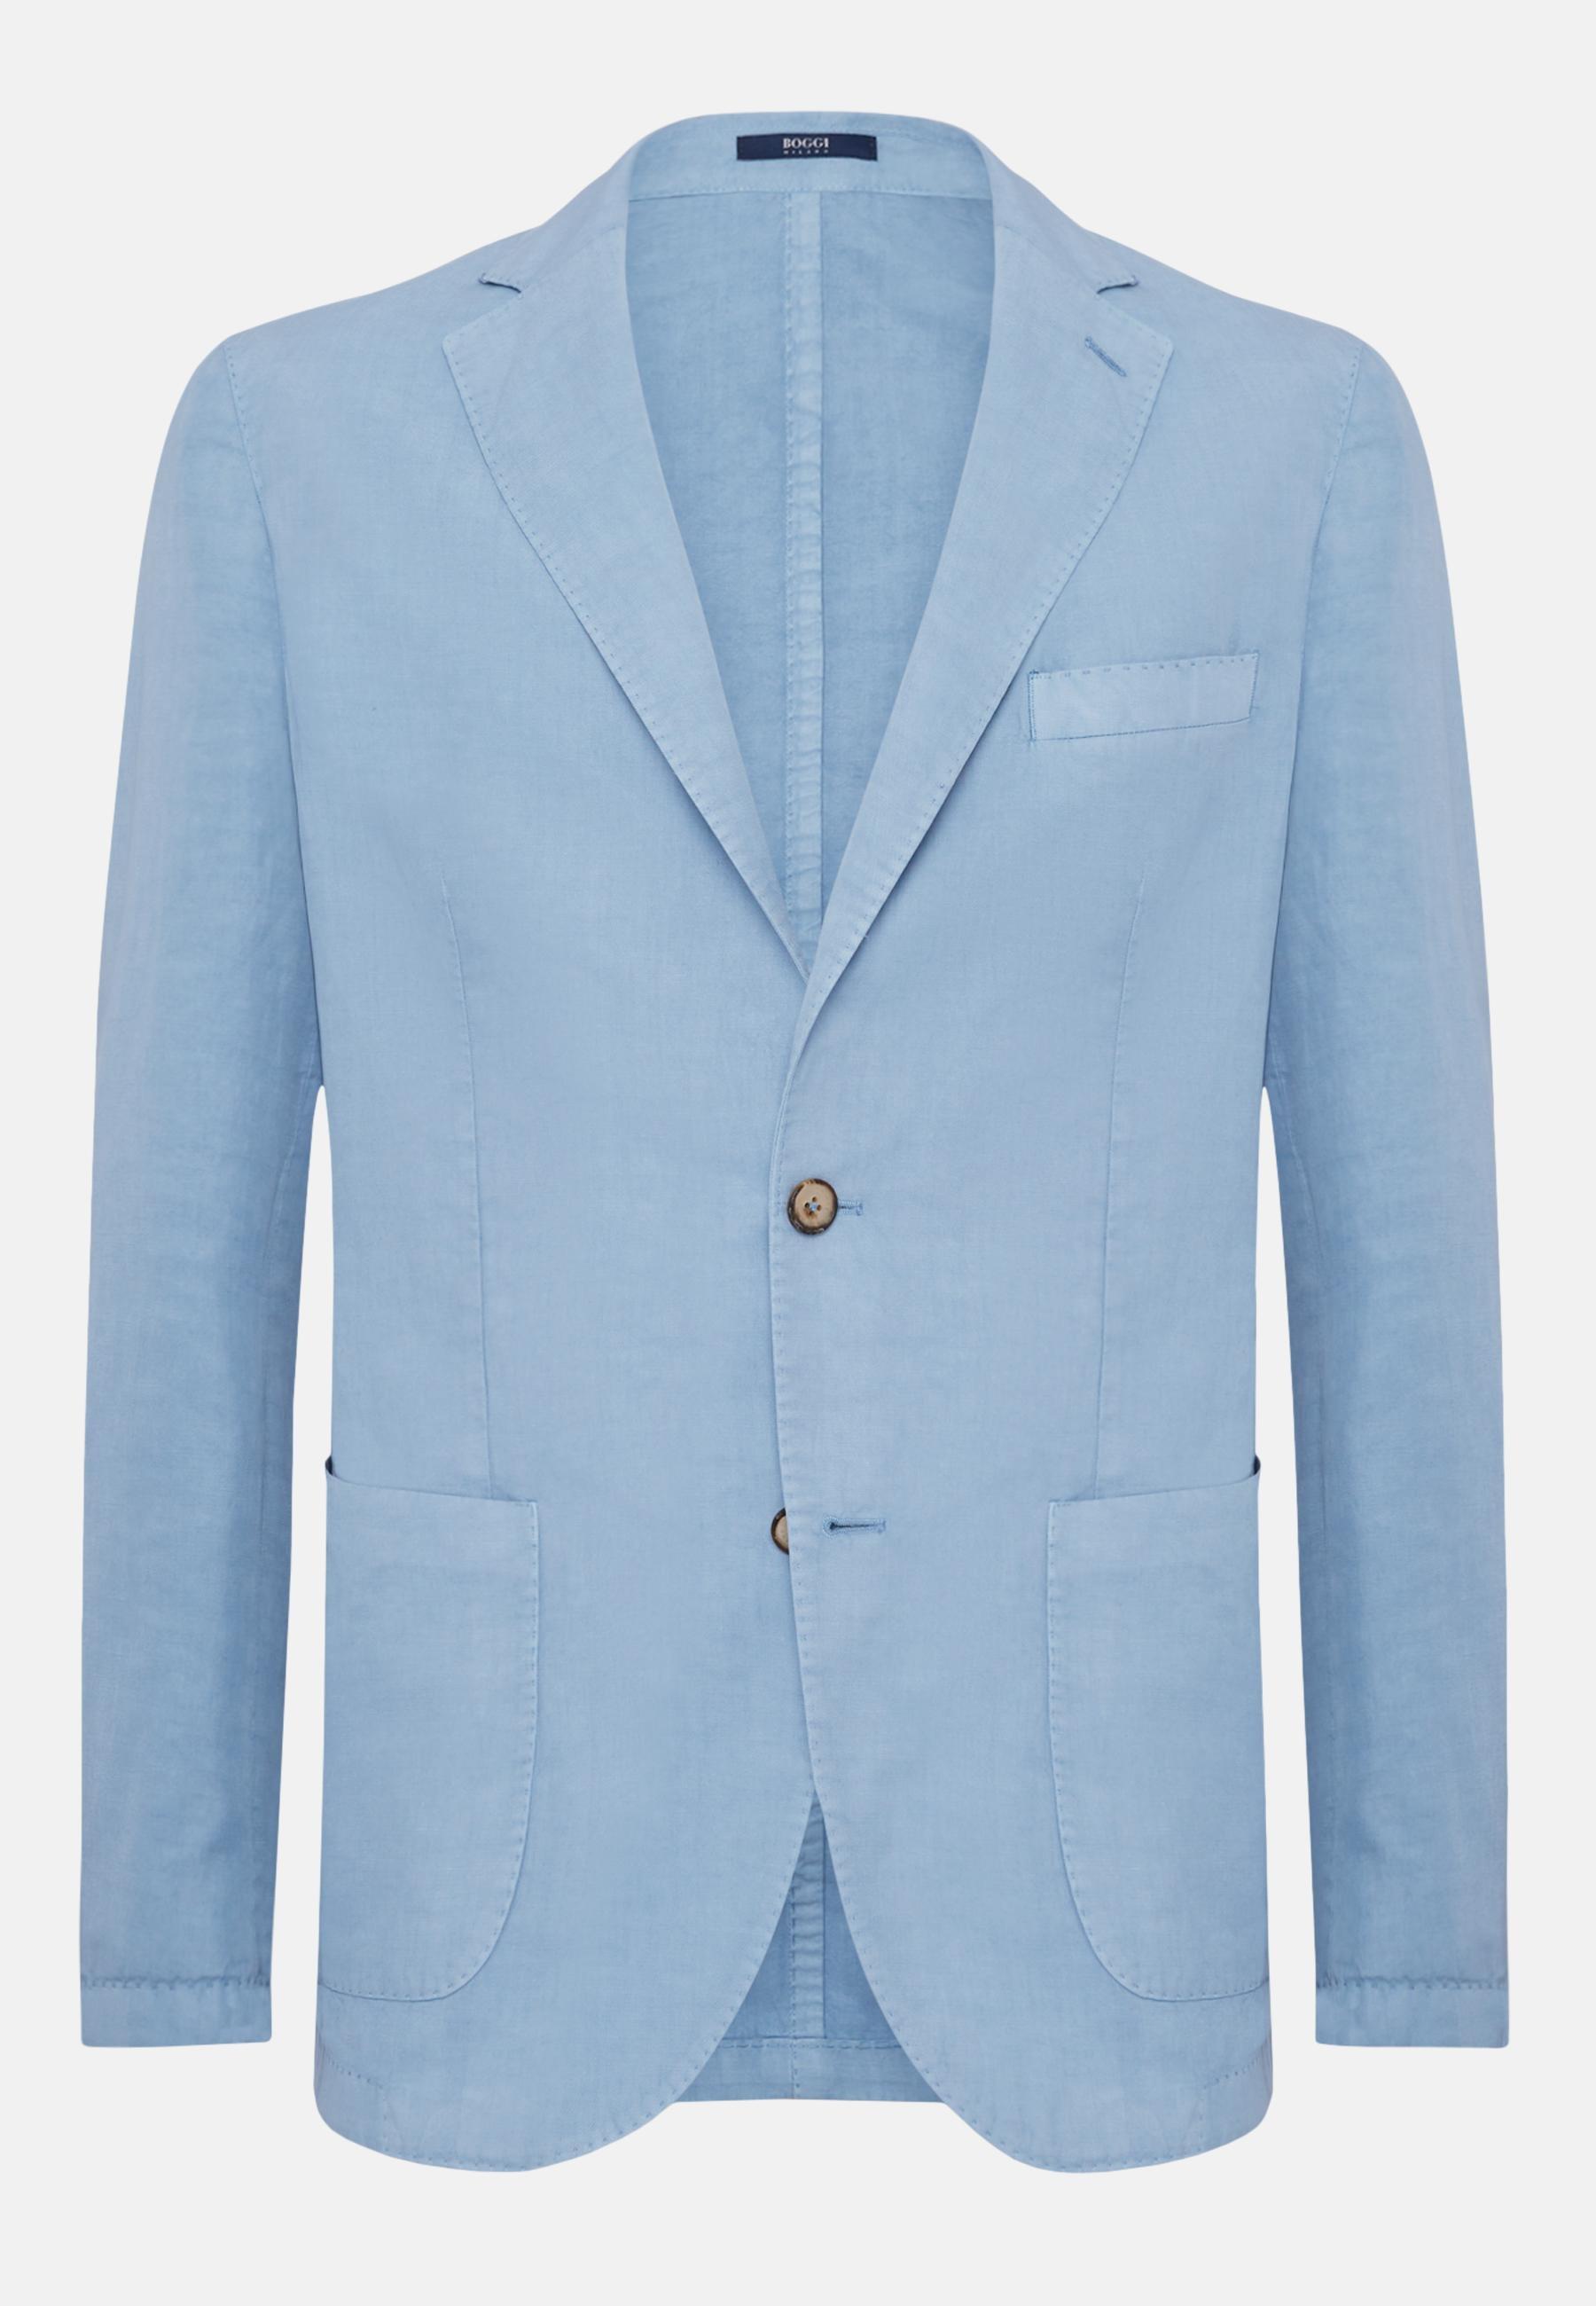 Boggi Milano - Blue Tencel/Linen/Cotton Jacket